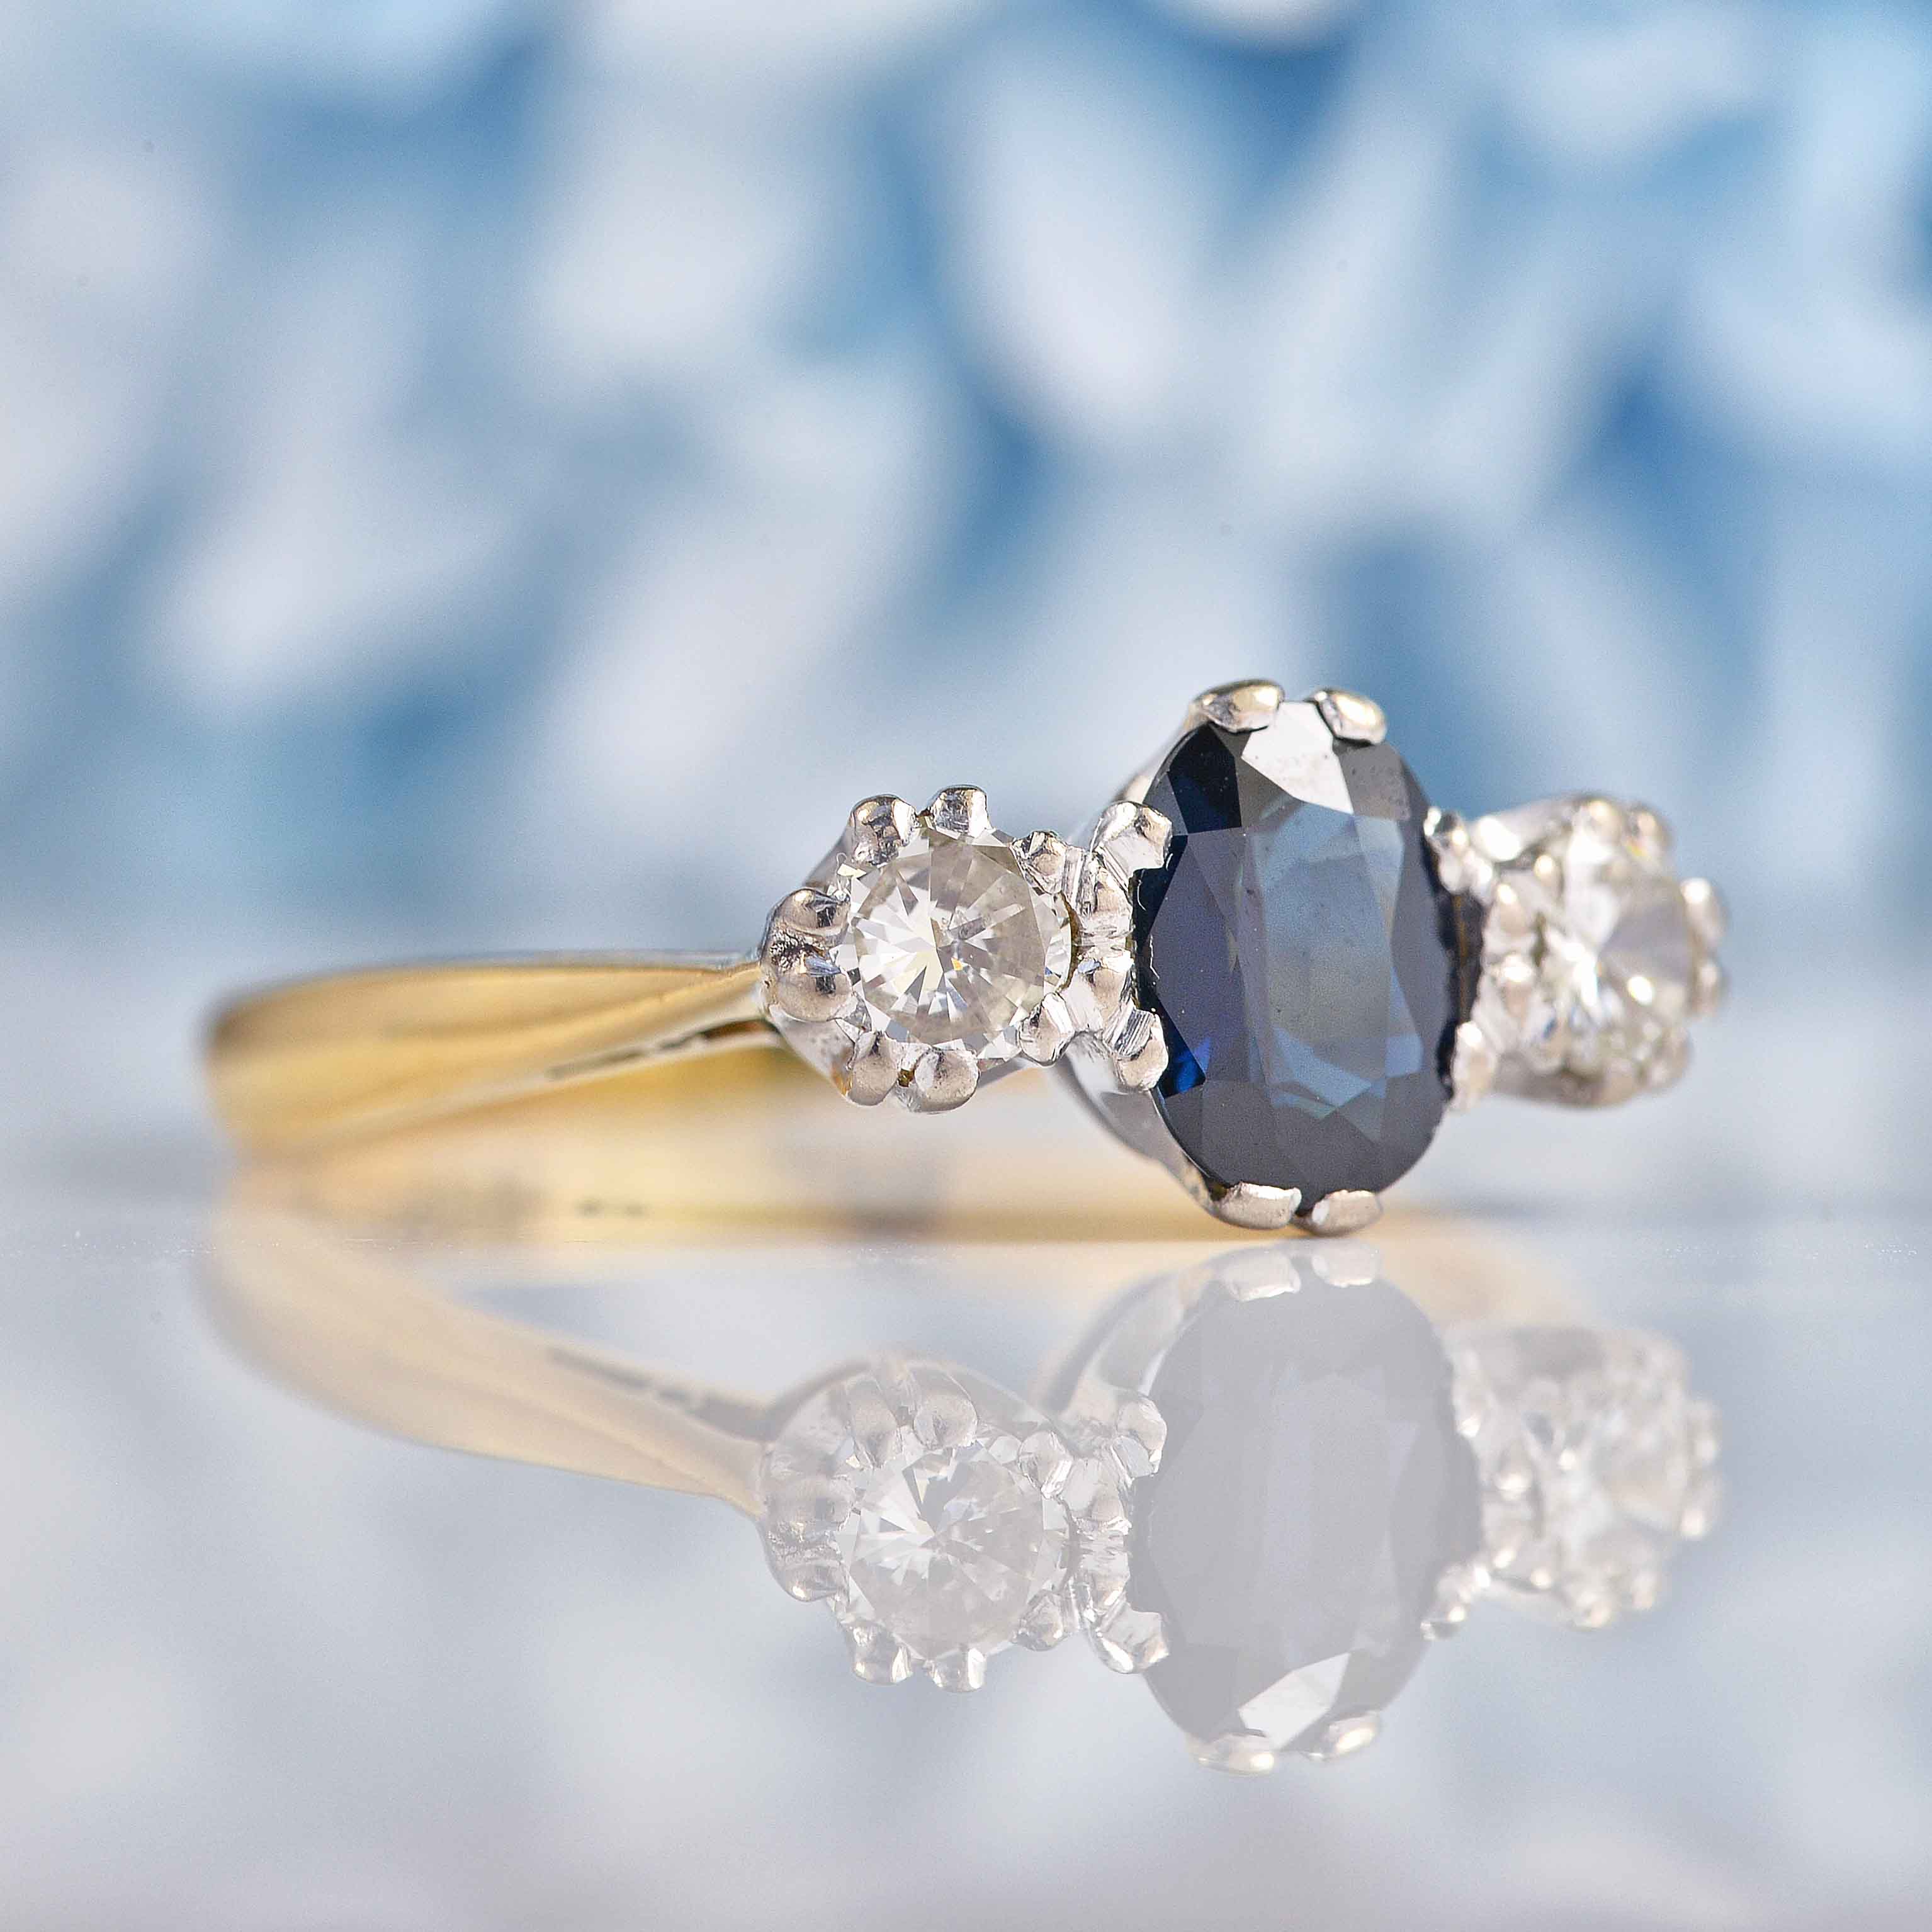 Ellibelle Jewellery Vintage Sapphire & Diamond 18ct Gold Three Stone Trilogy Engagement Ring